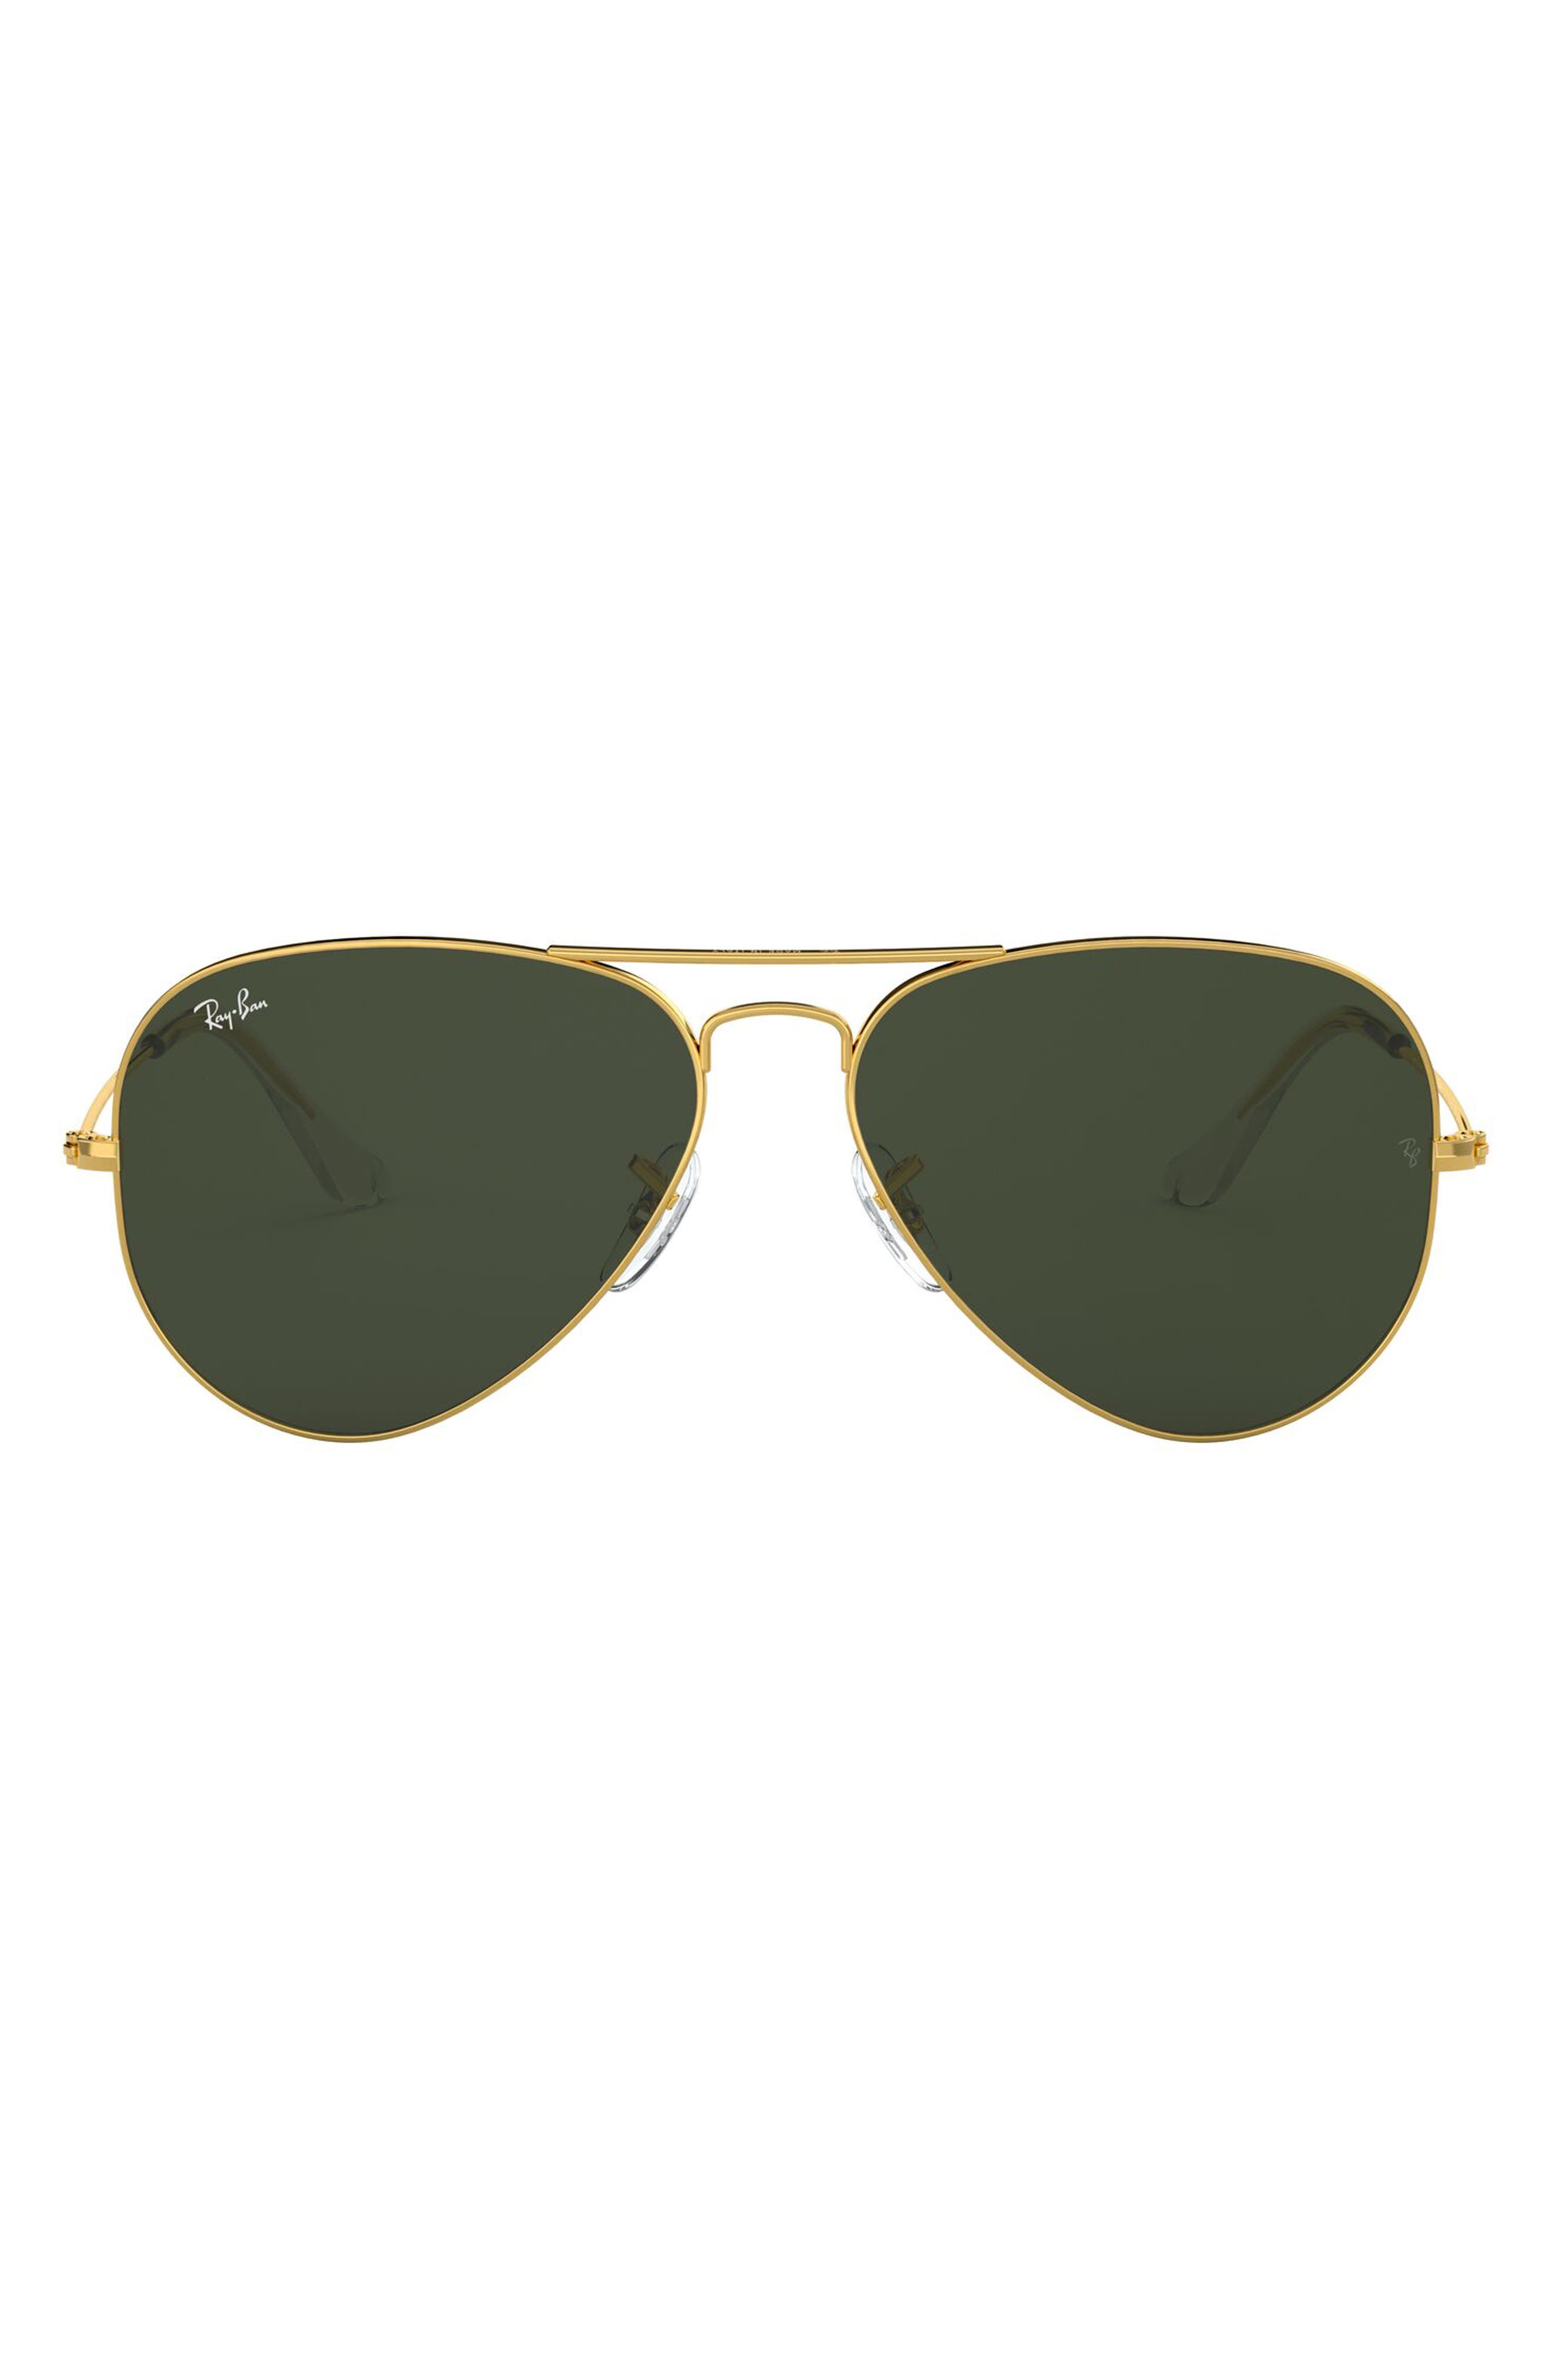 NEW Nine West Womens Gold Aviator Sunglasses Pilot Fashion Trendy Cute A26 